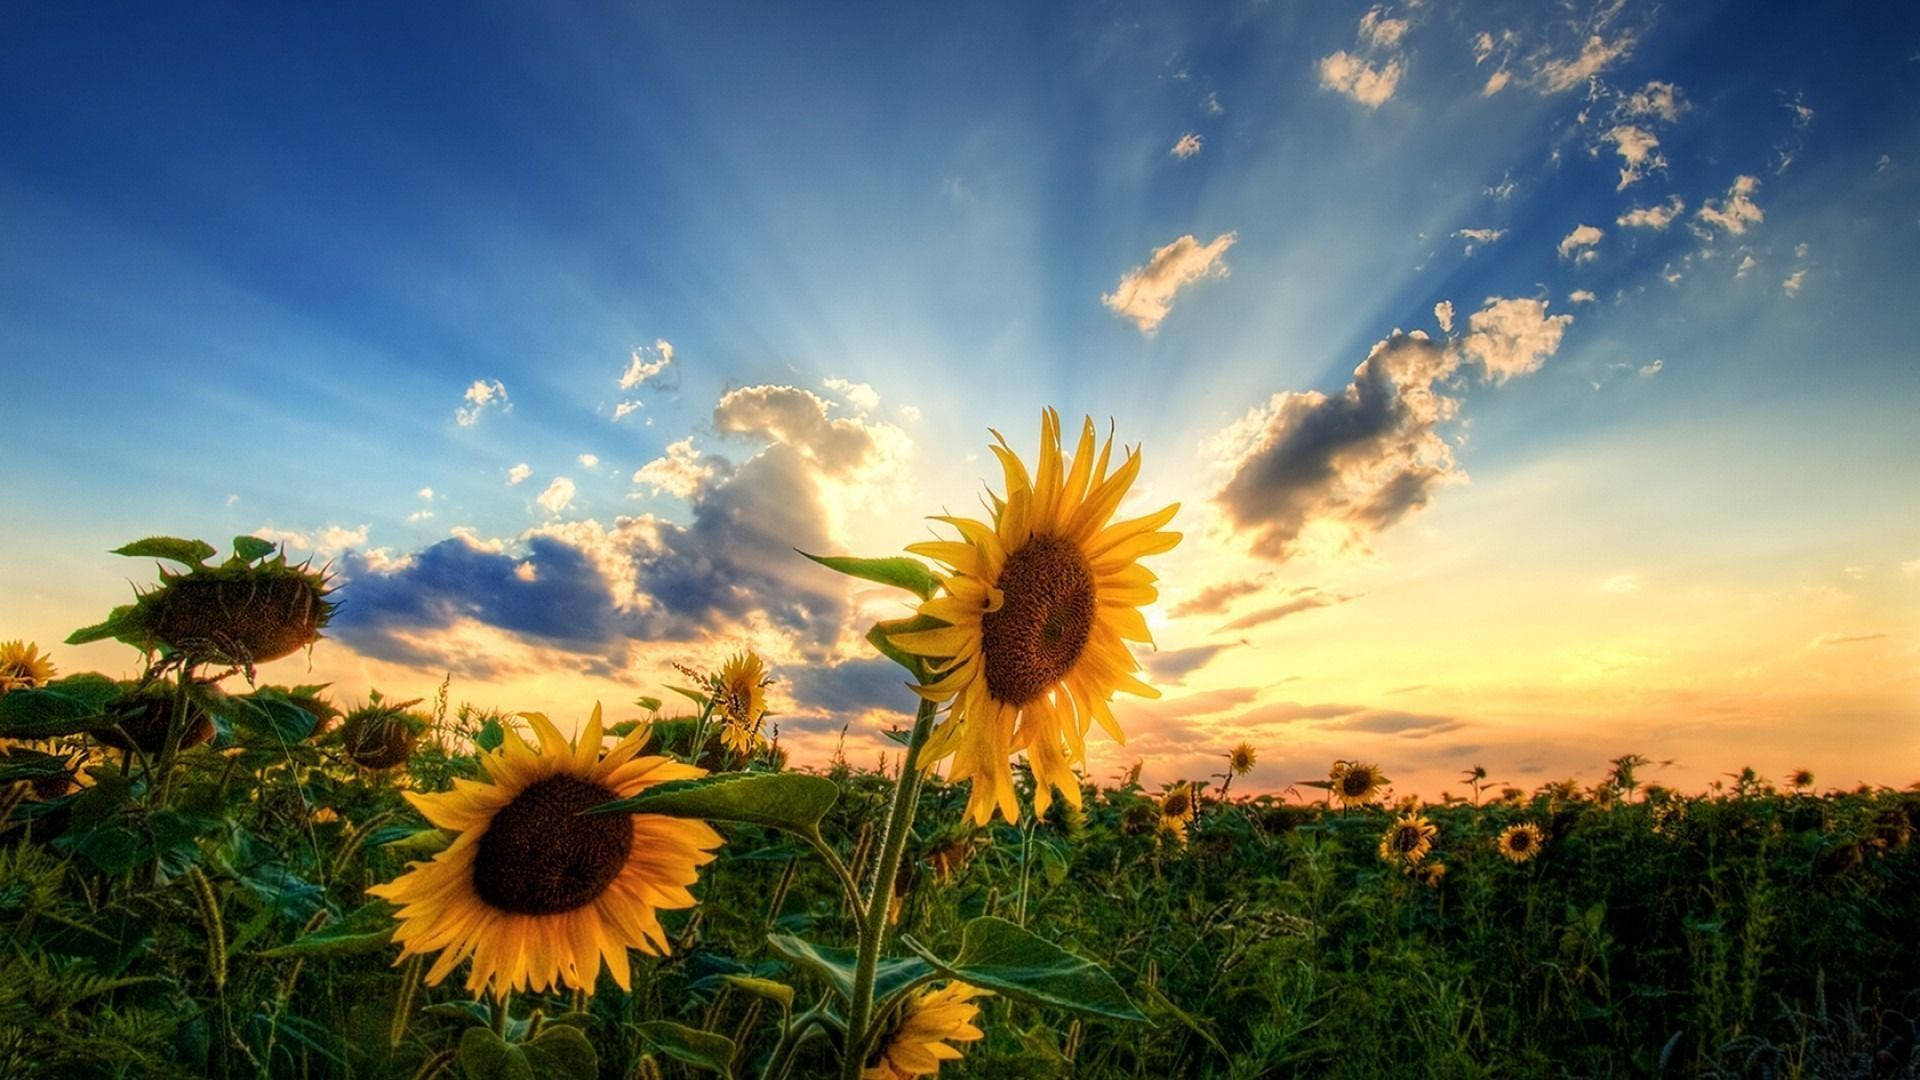 Sunflowers In Summer Sunset